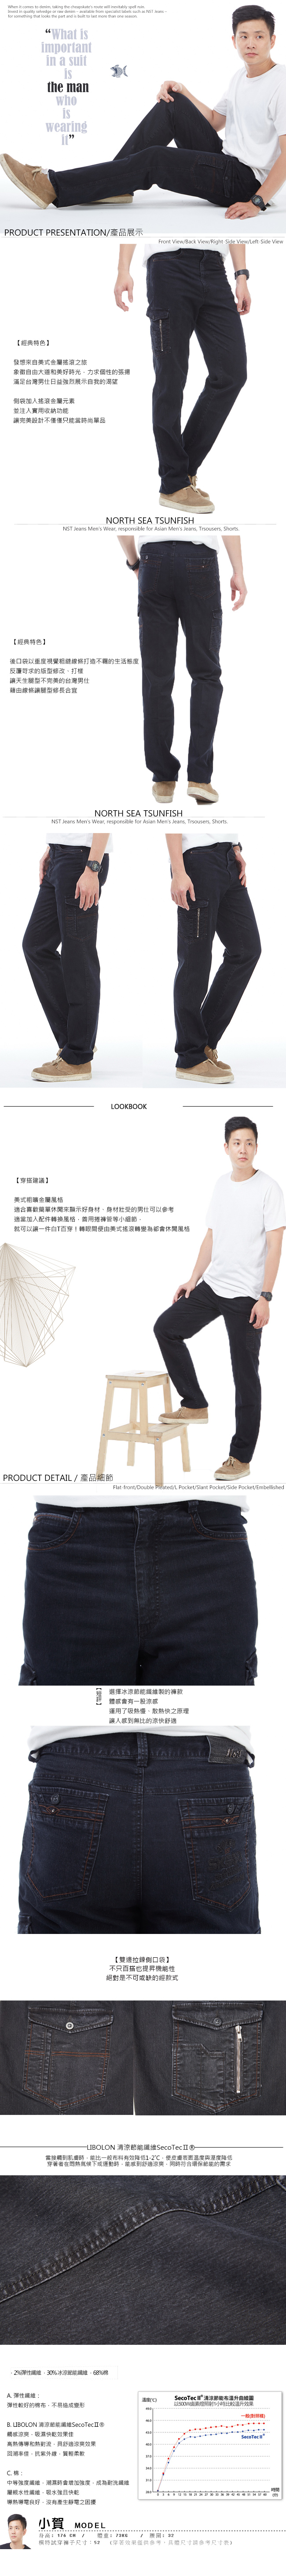 【NST Jeans】美式硬派 原色側袋 男牛仔工作褲(中腰) 390(5660) 台製 紳士 男 四季皆可穿